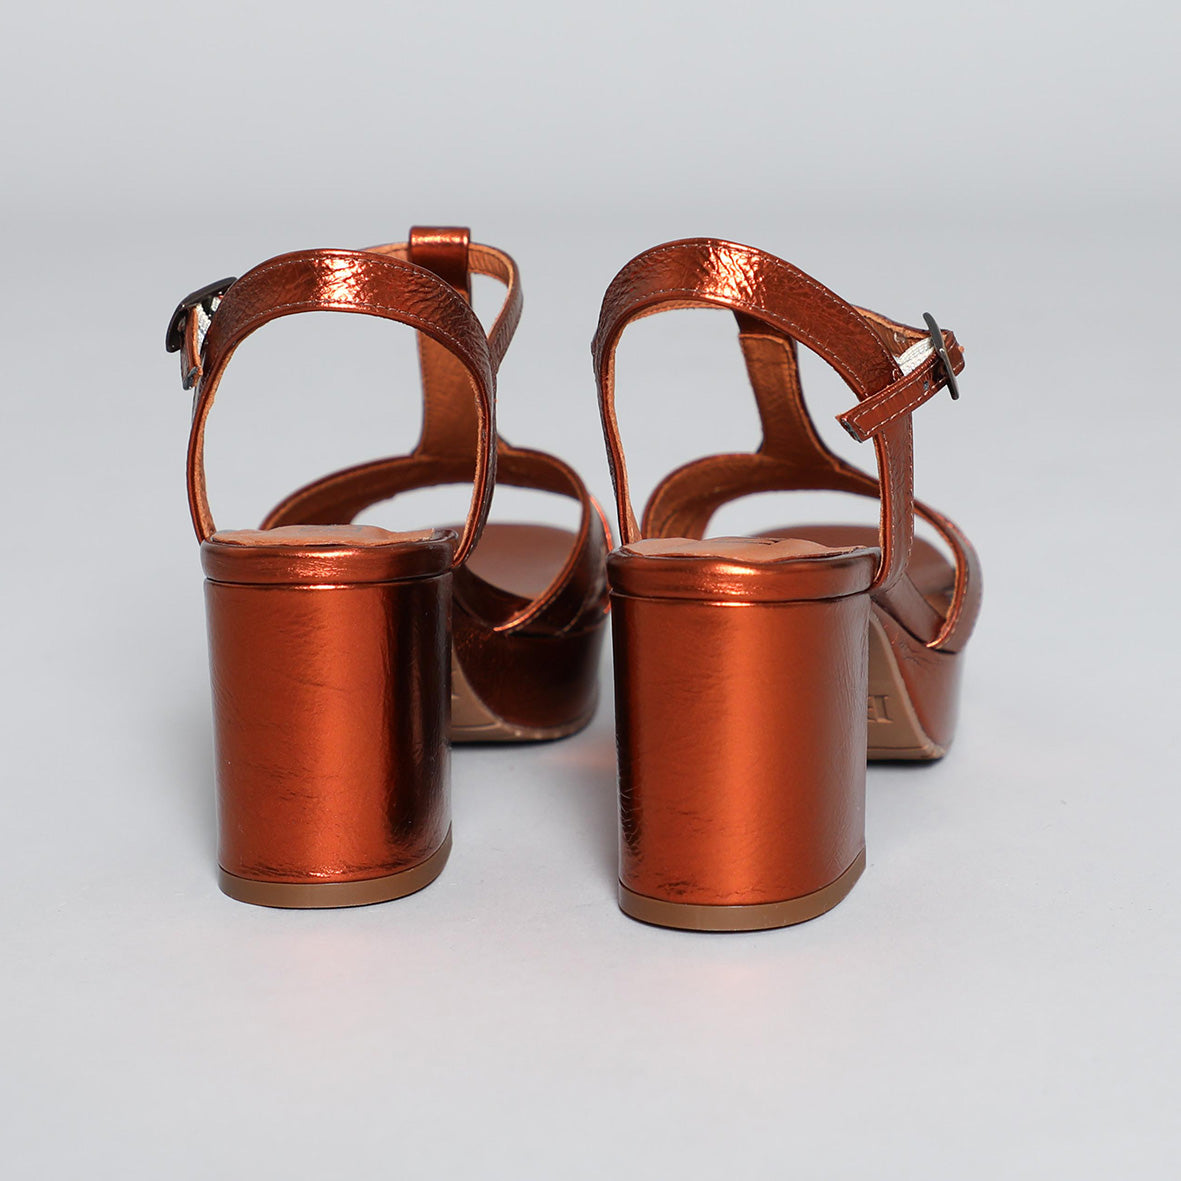 AQUAZZURA Olie Plateau 140 knotted metallic leather platform sandals |  Absatz, High heels gold, Plattform sandalen